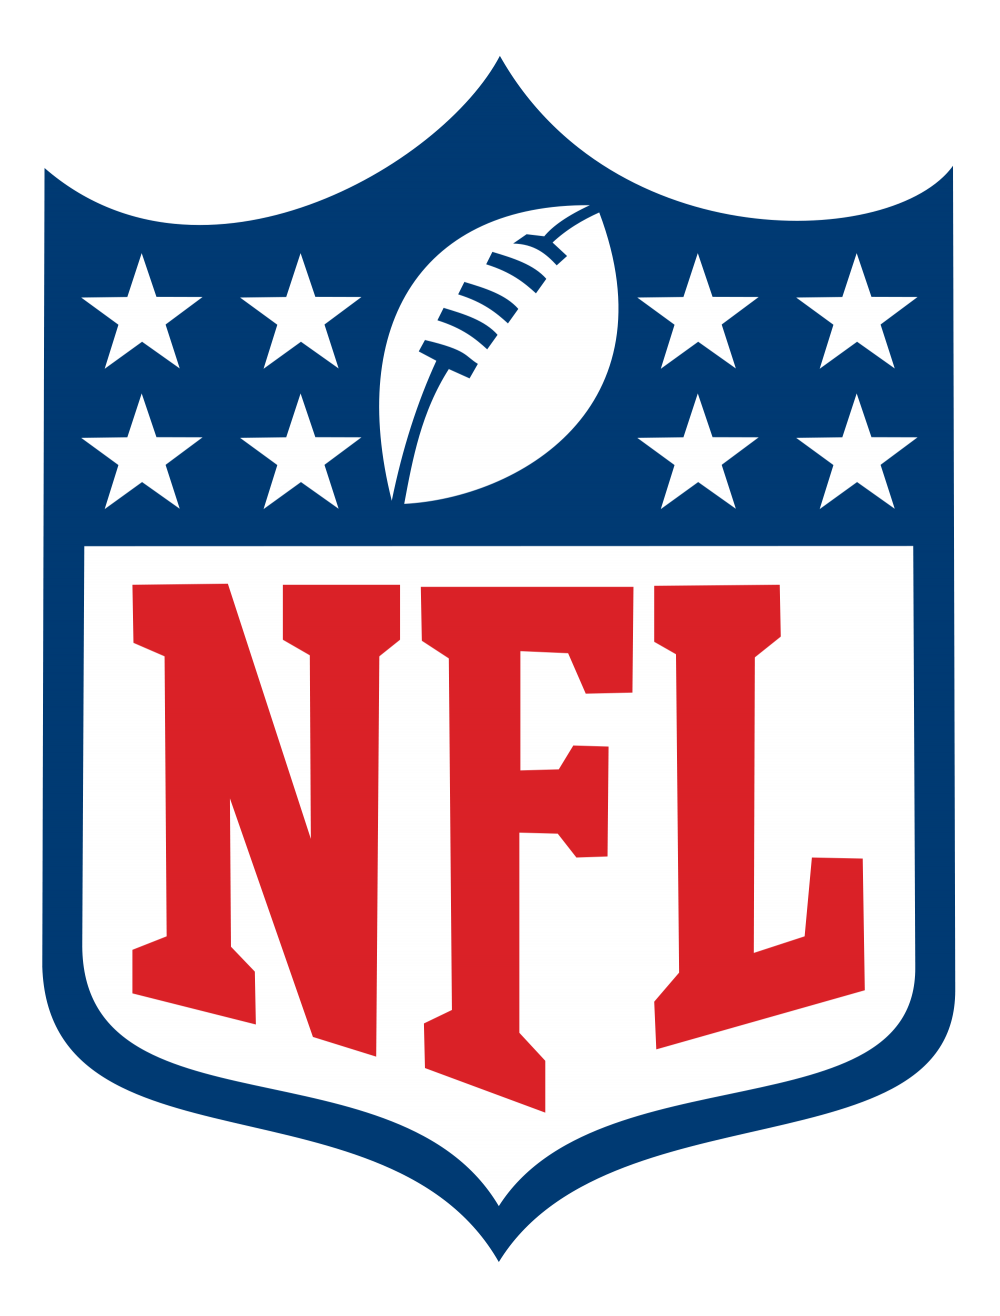 High Quality NFL logo Blank Meme Template